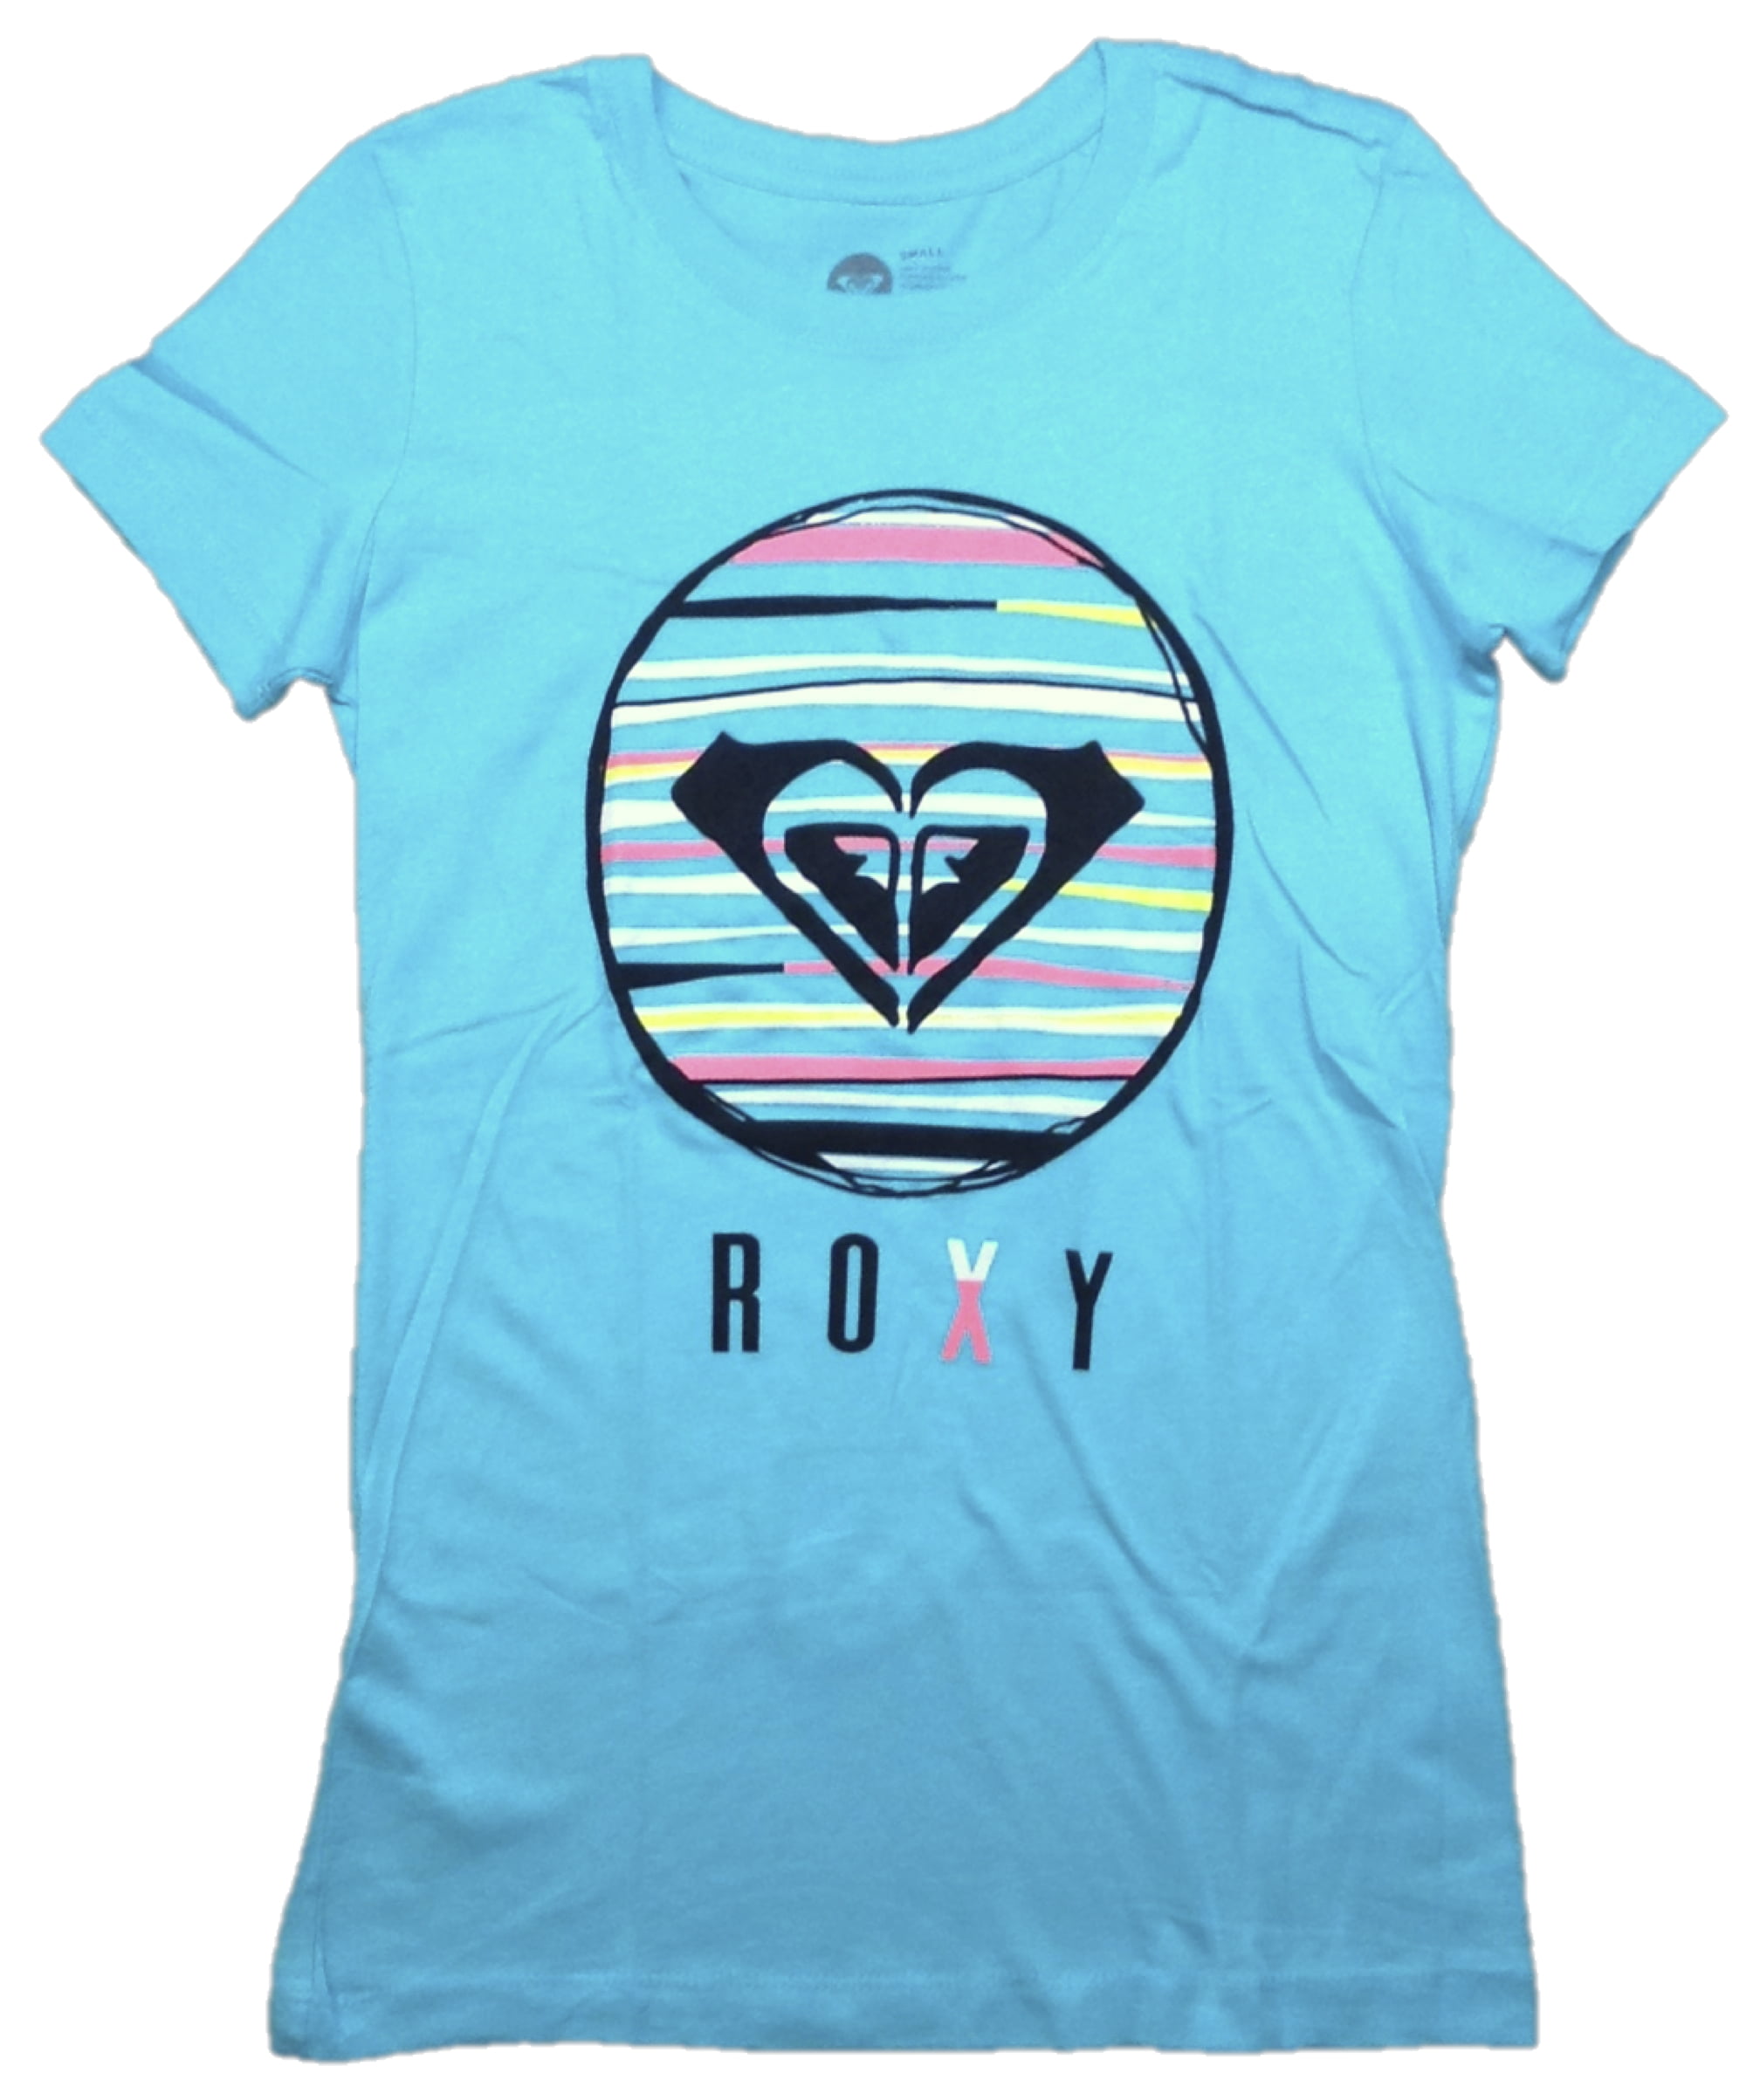 ROXY Summer Bright Pour Femme SS T shirt Top 